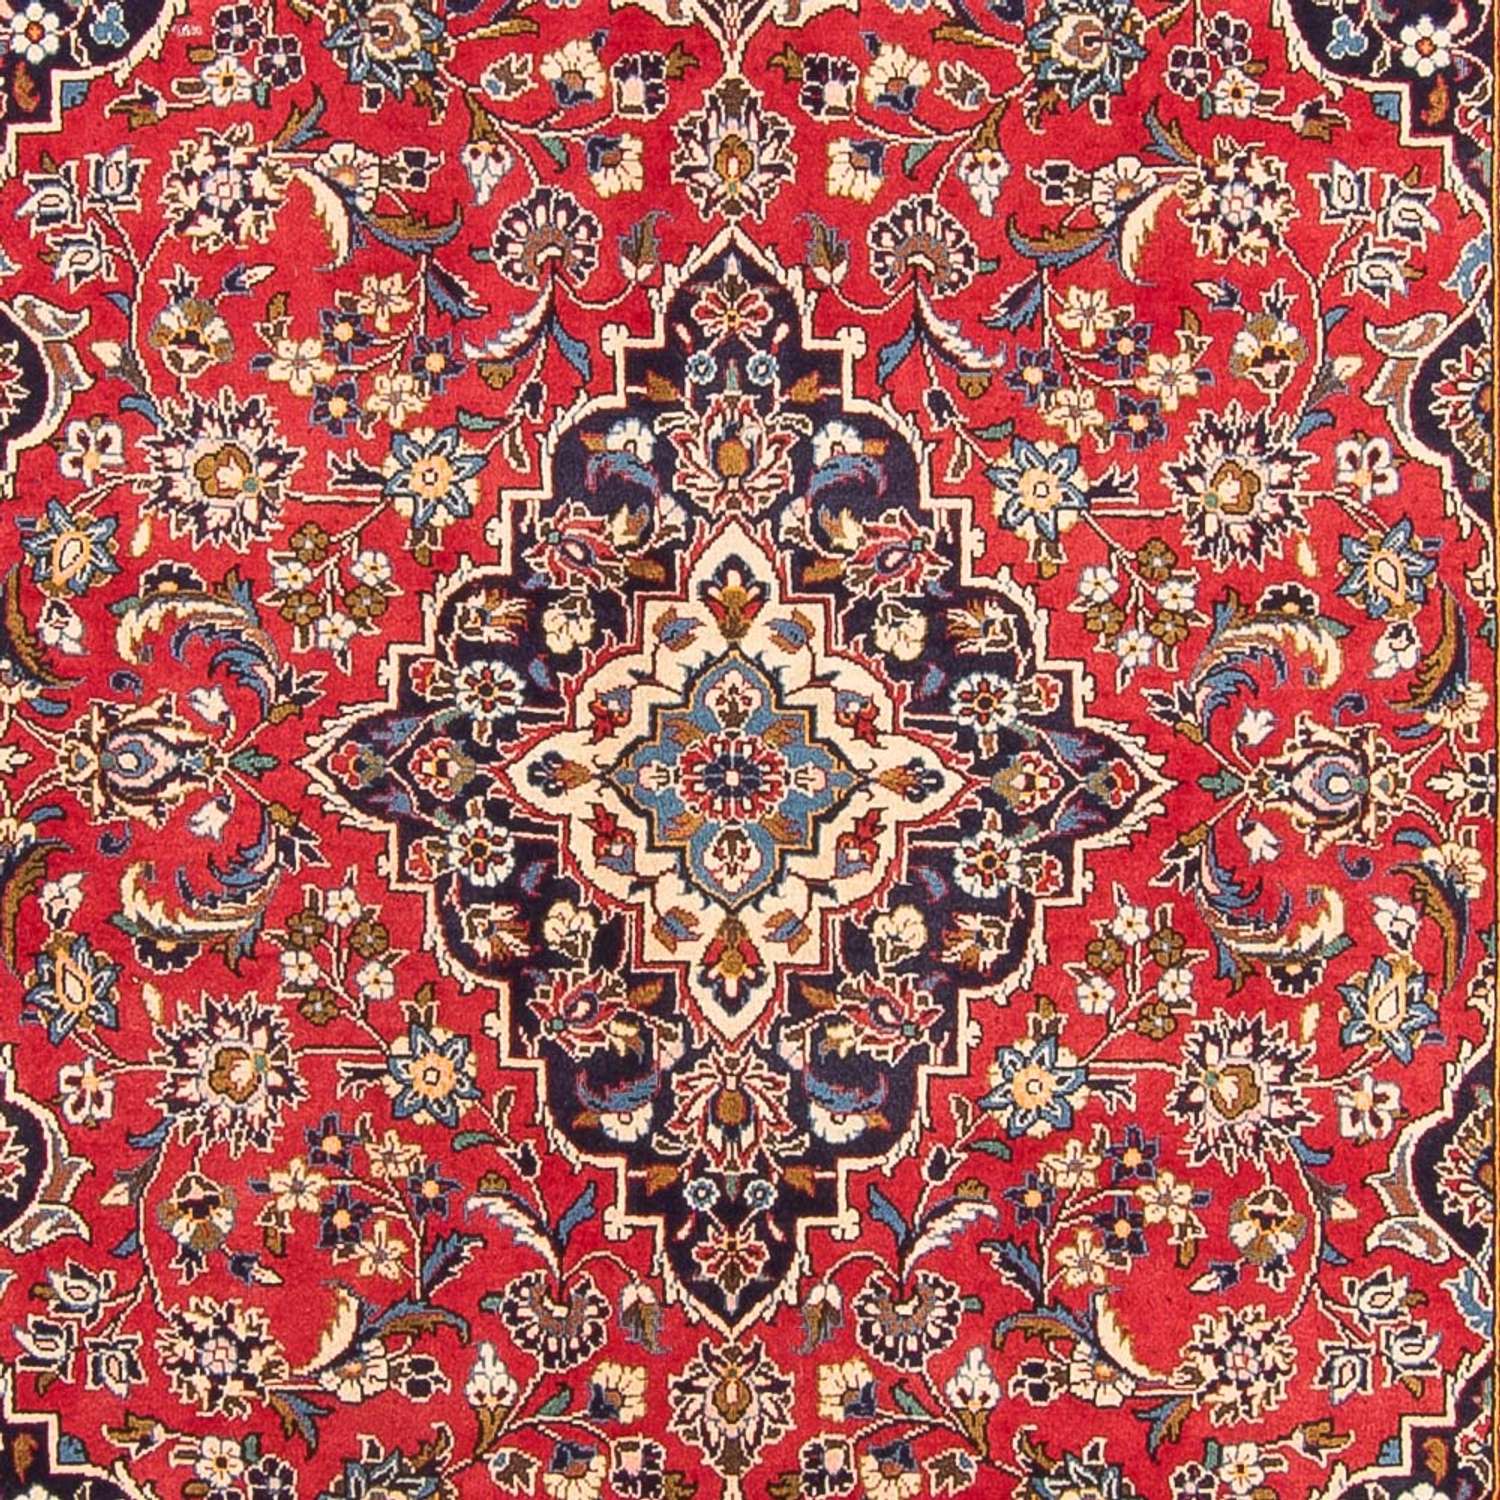 Perzisch tapijt - Keshan - 293 x 193 cm - rood